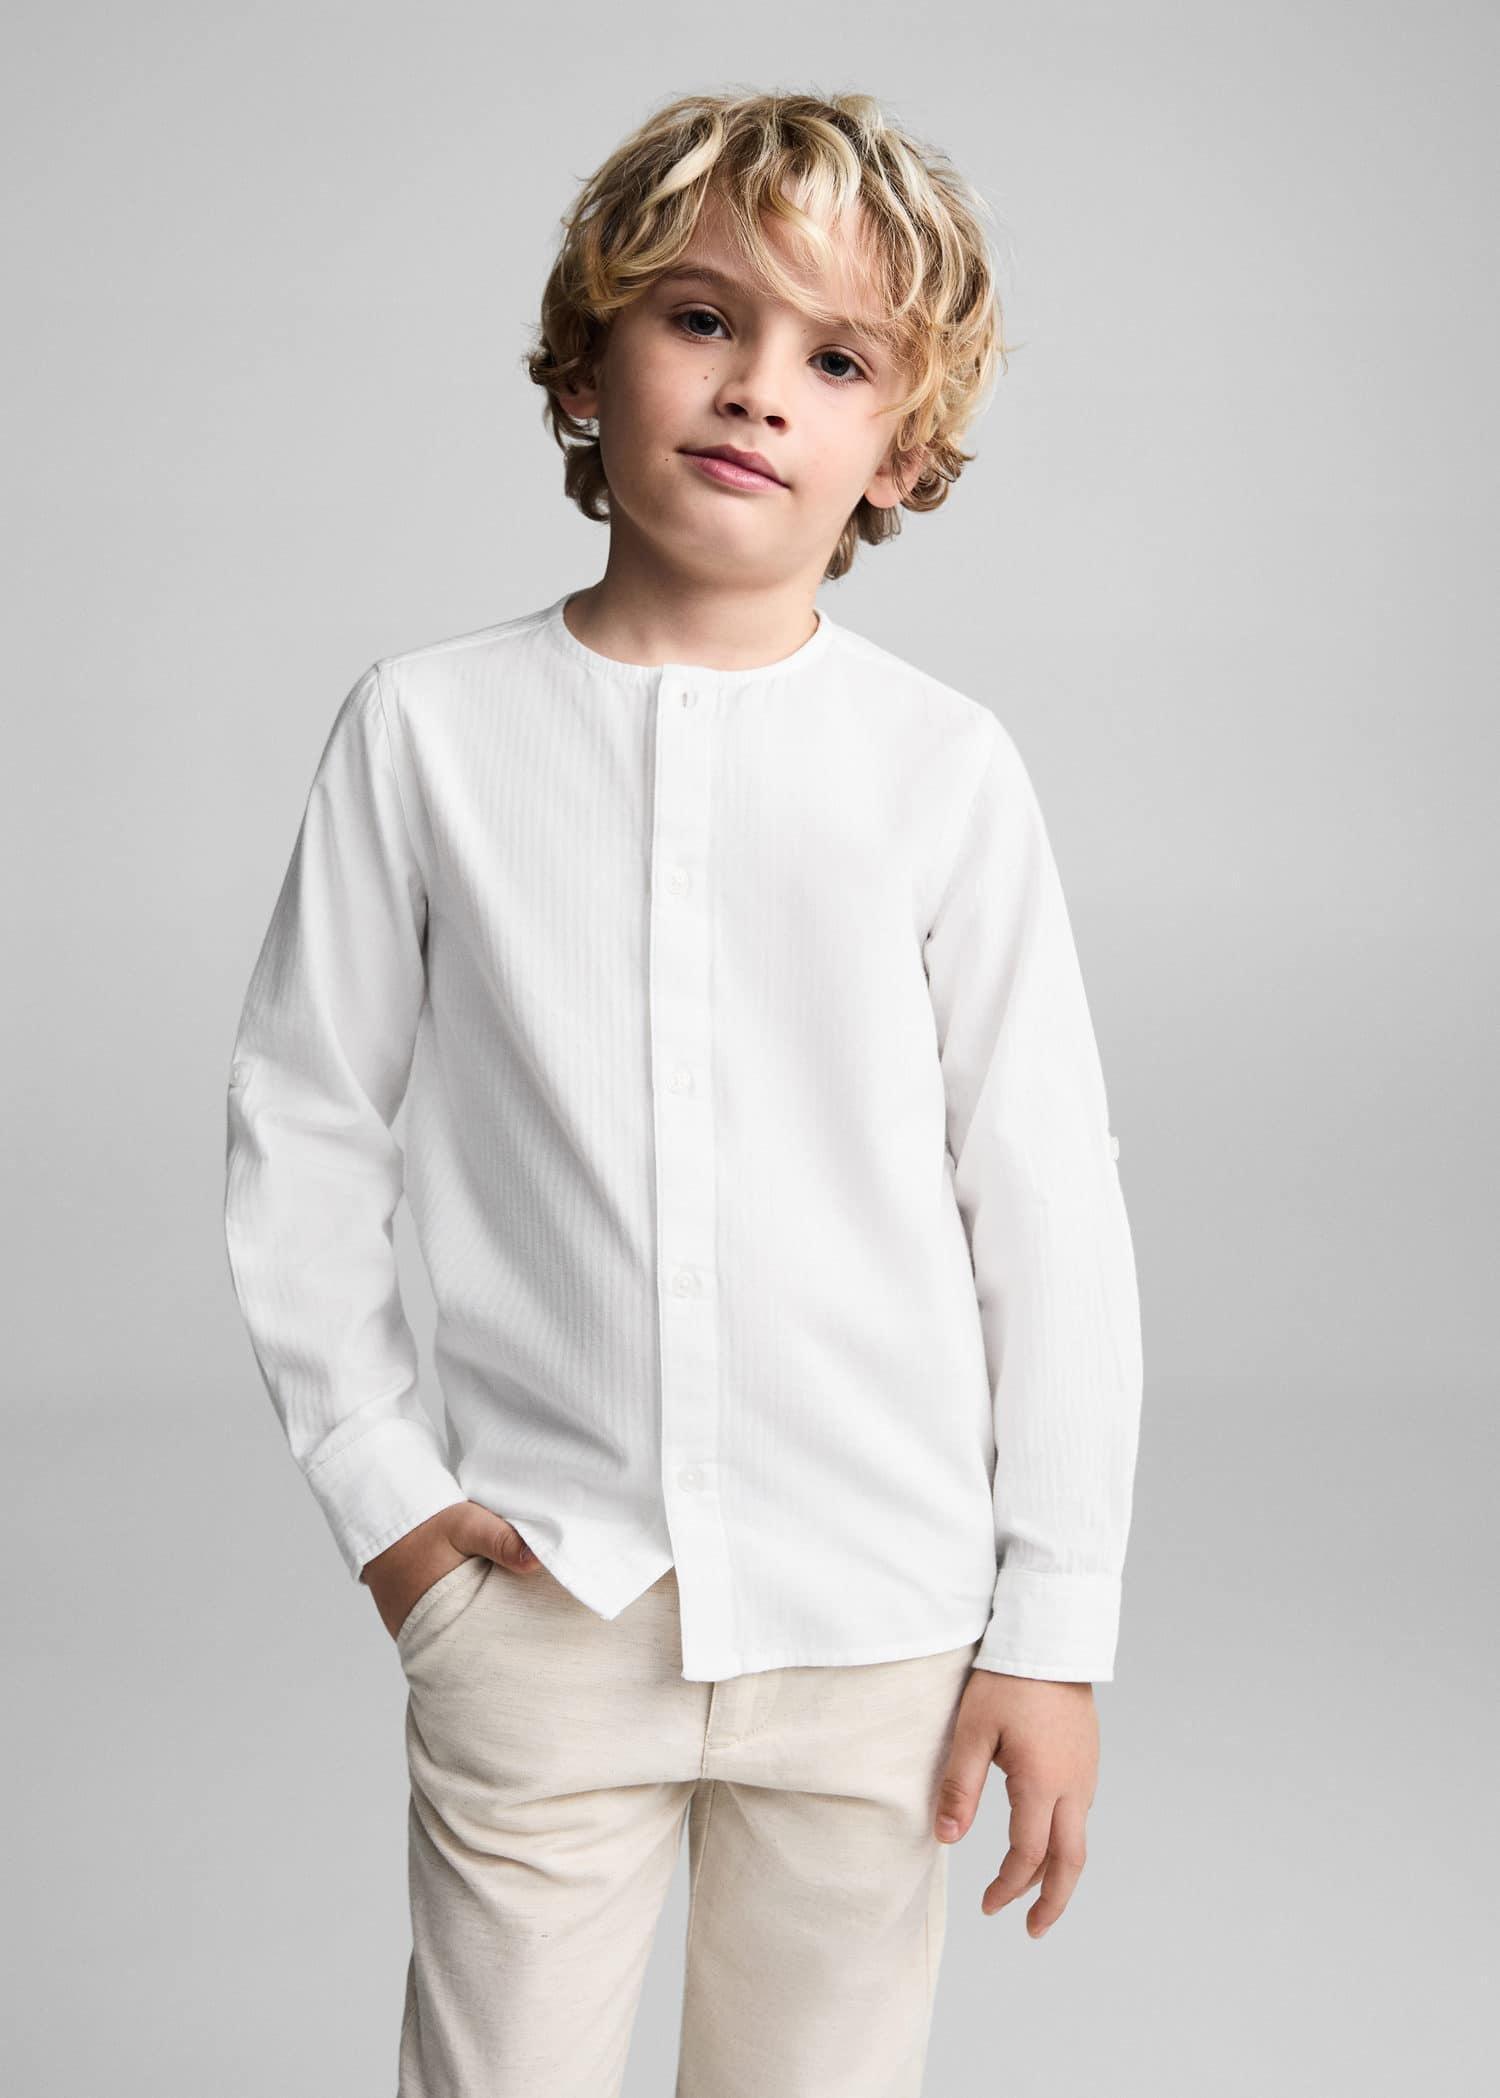 Mango - White Mao Collar Shirt, Kids Boys